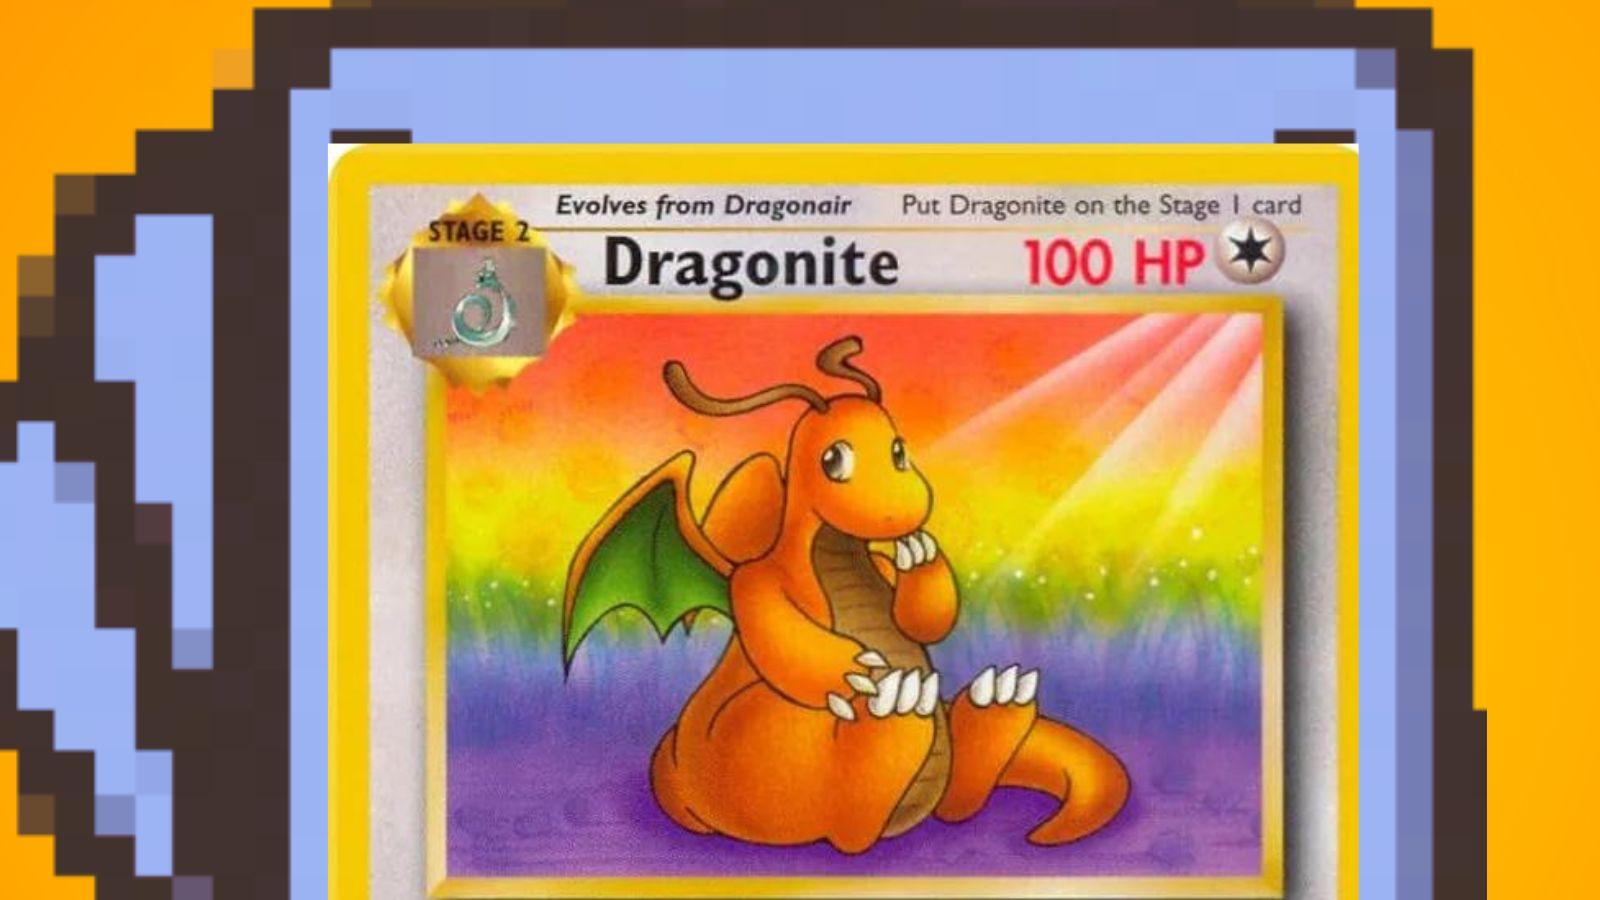 Dragonite Pokemon Card against an orange background